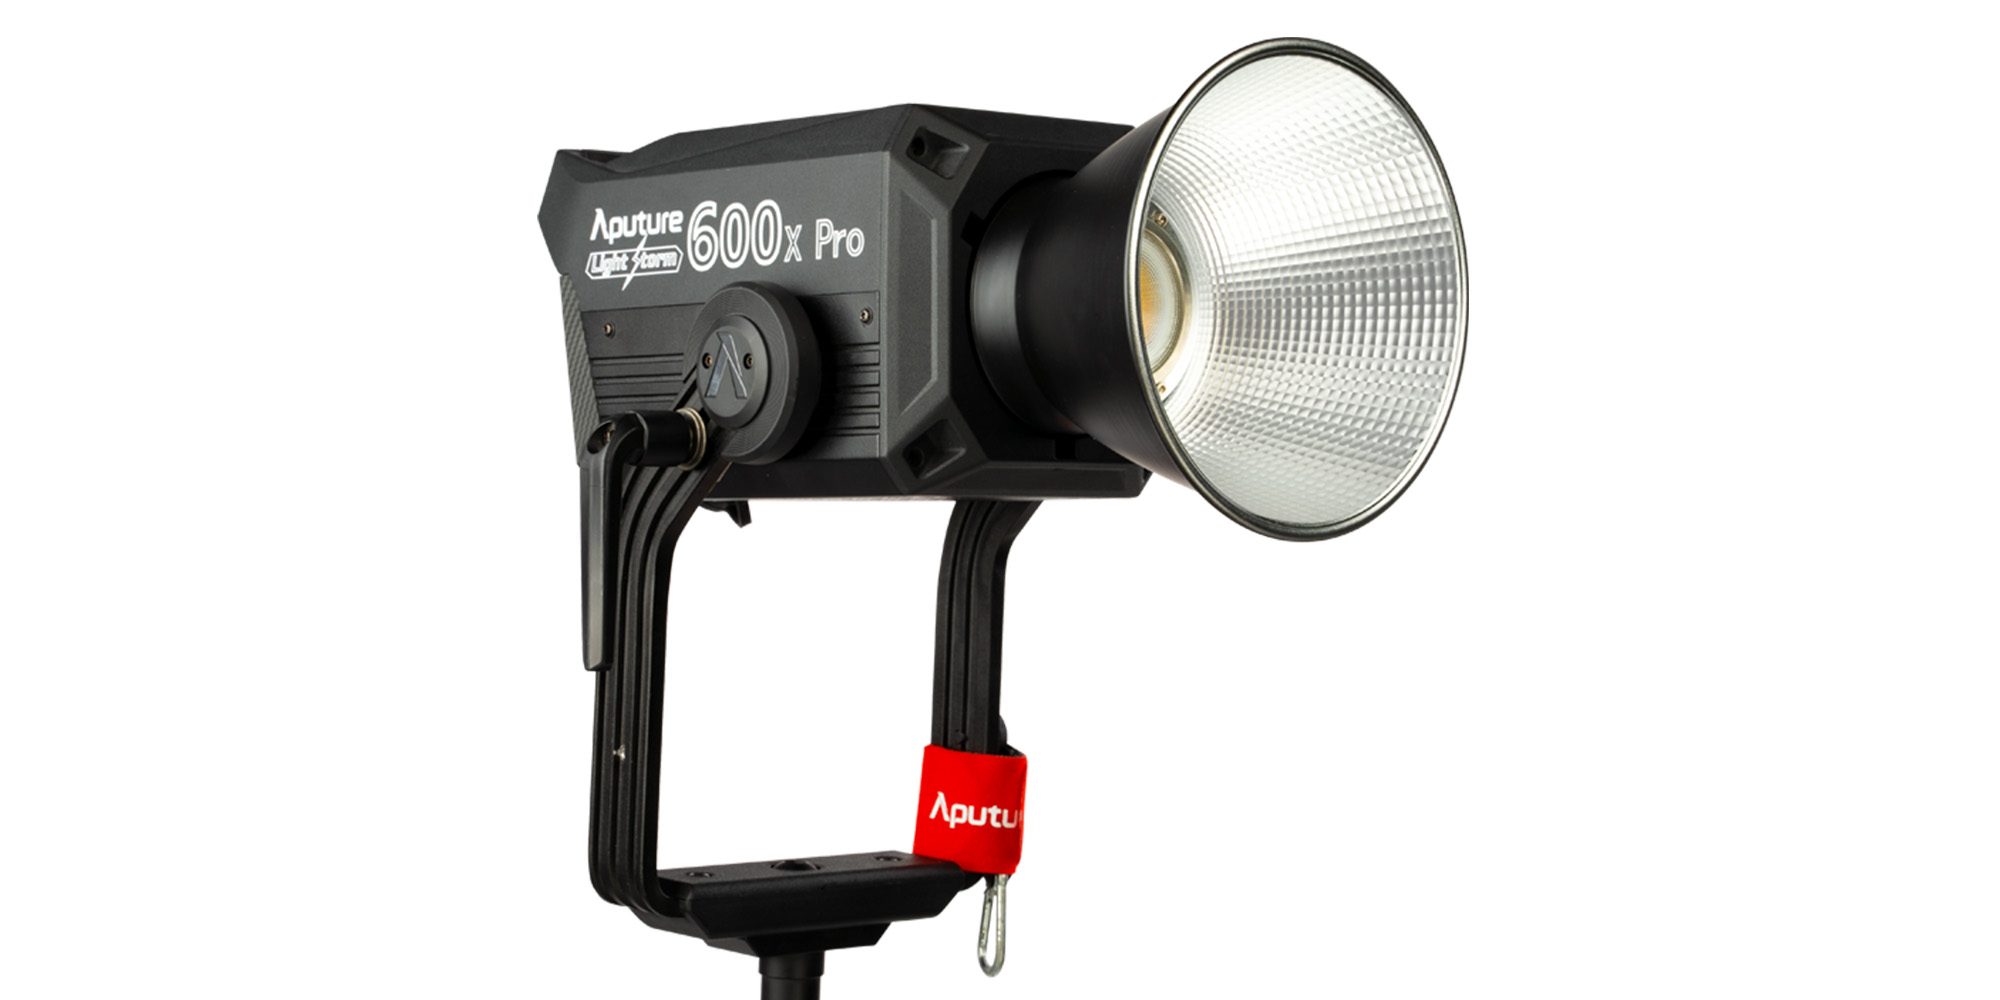 Aputure Light Storm LS 600x Pro LED Lamp - V-mount - Built for Professionals